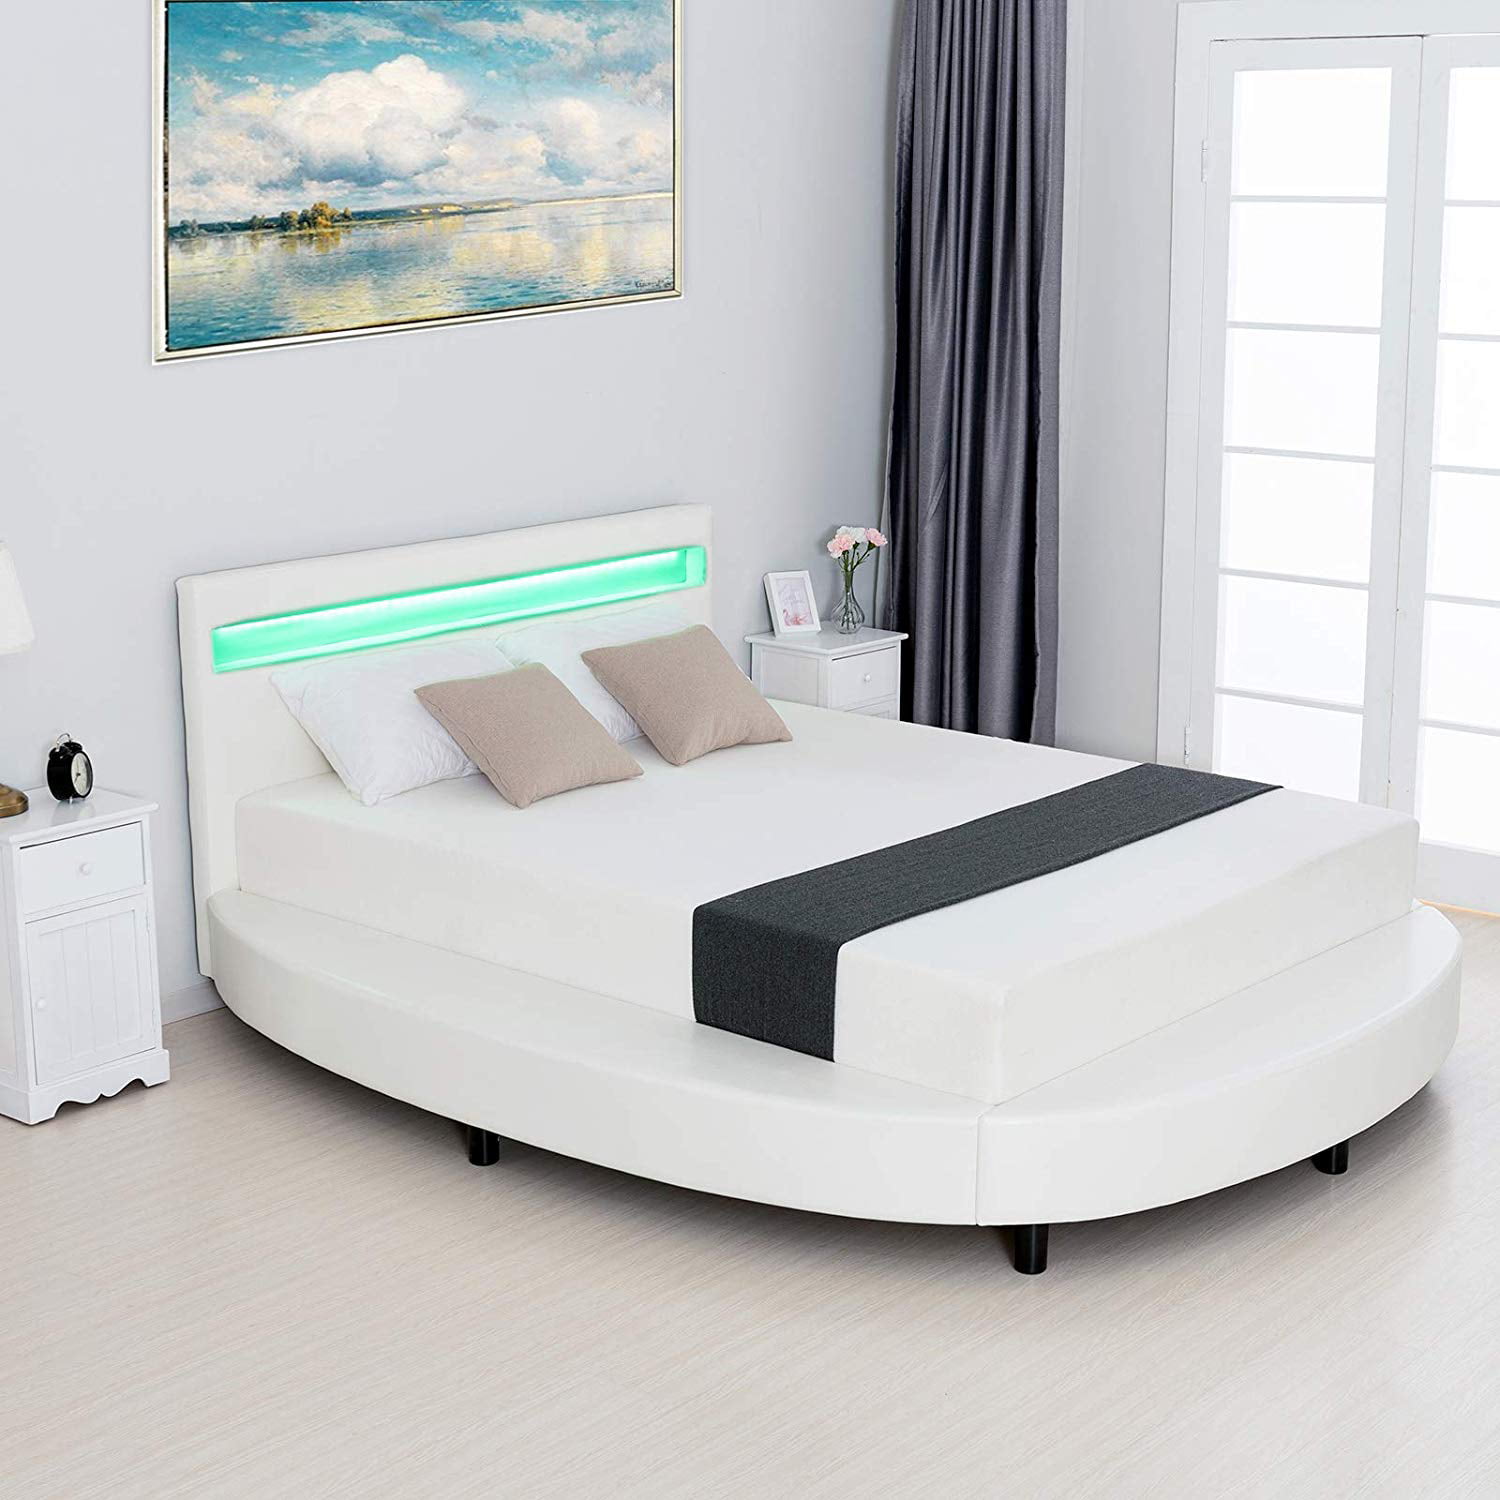 Mecor Modern Upholstered Round Platform, Modern Round Bed